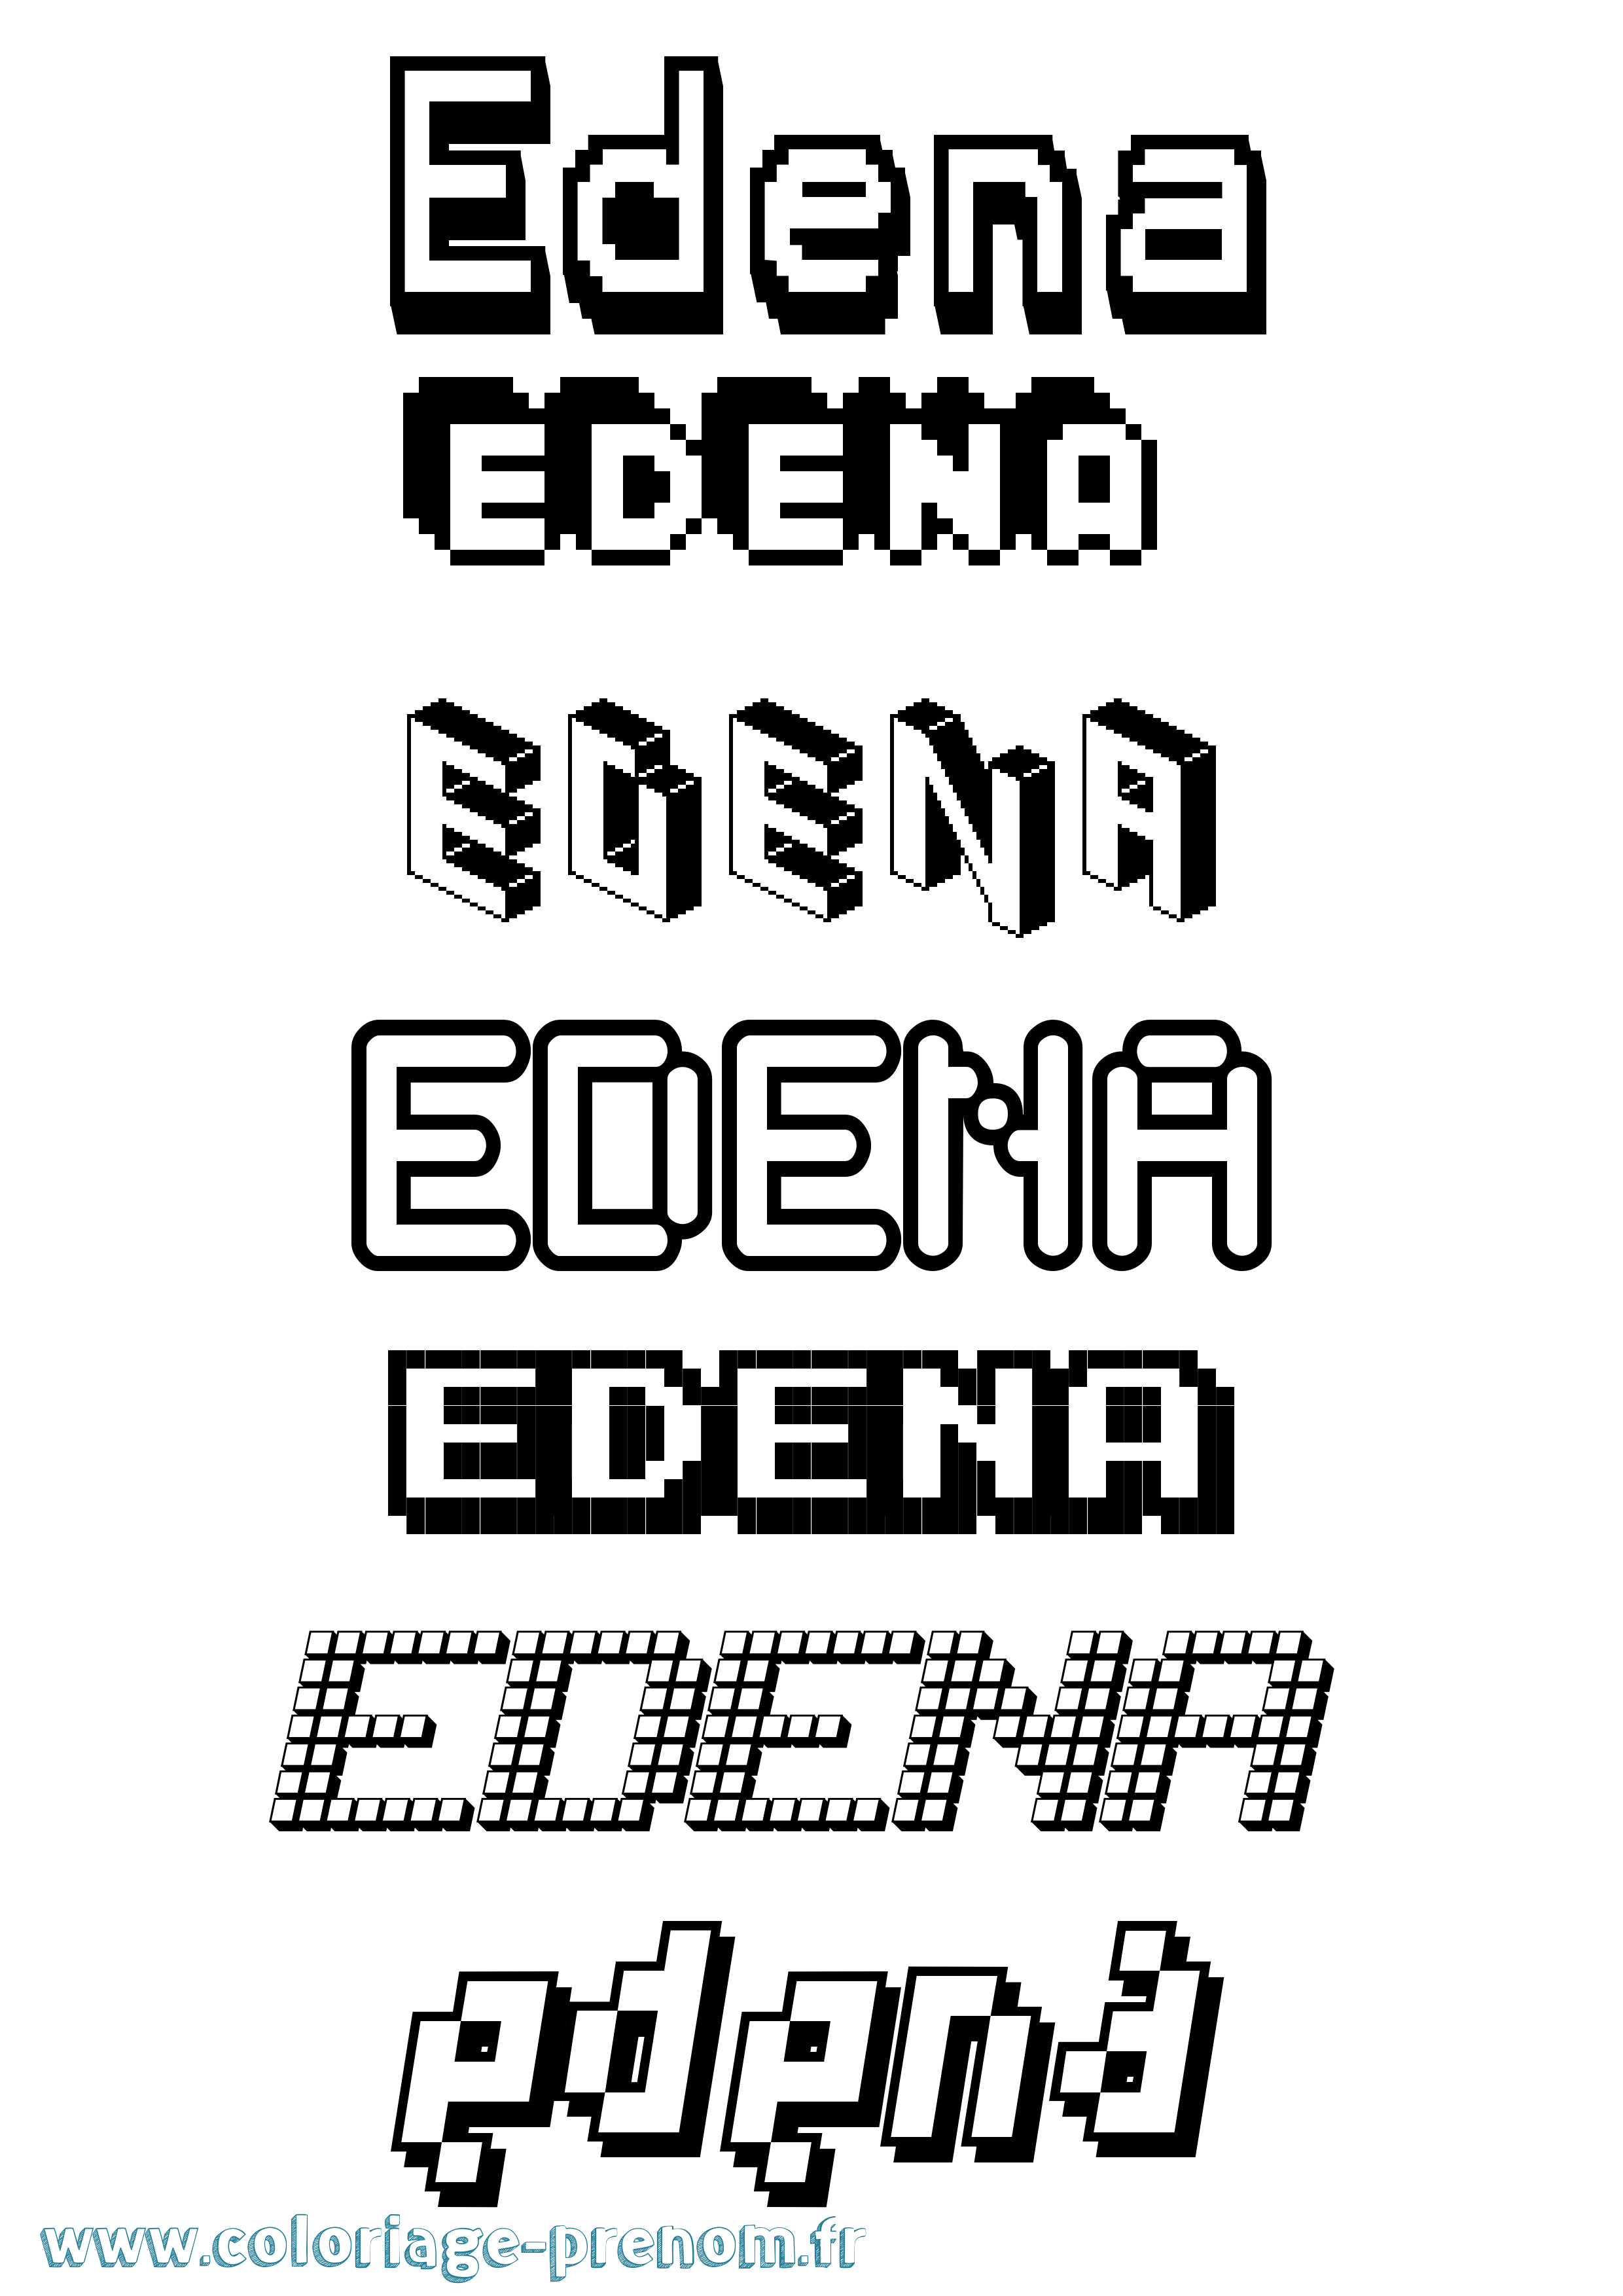 Coloriage prénom Edena Pixel